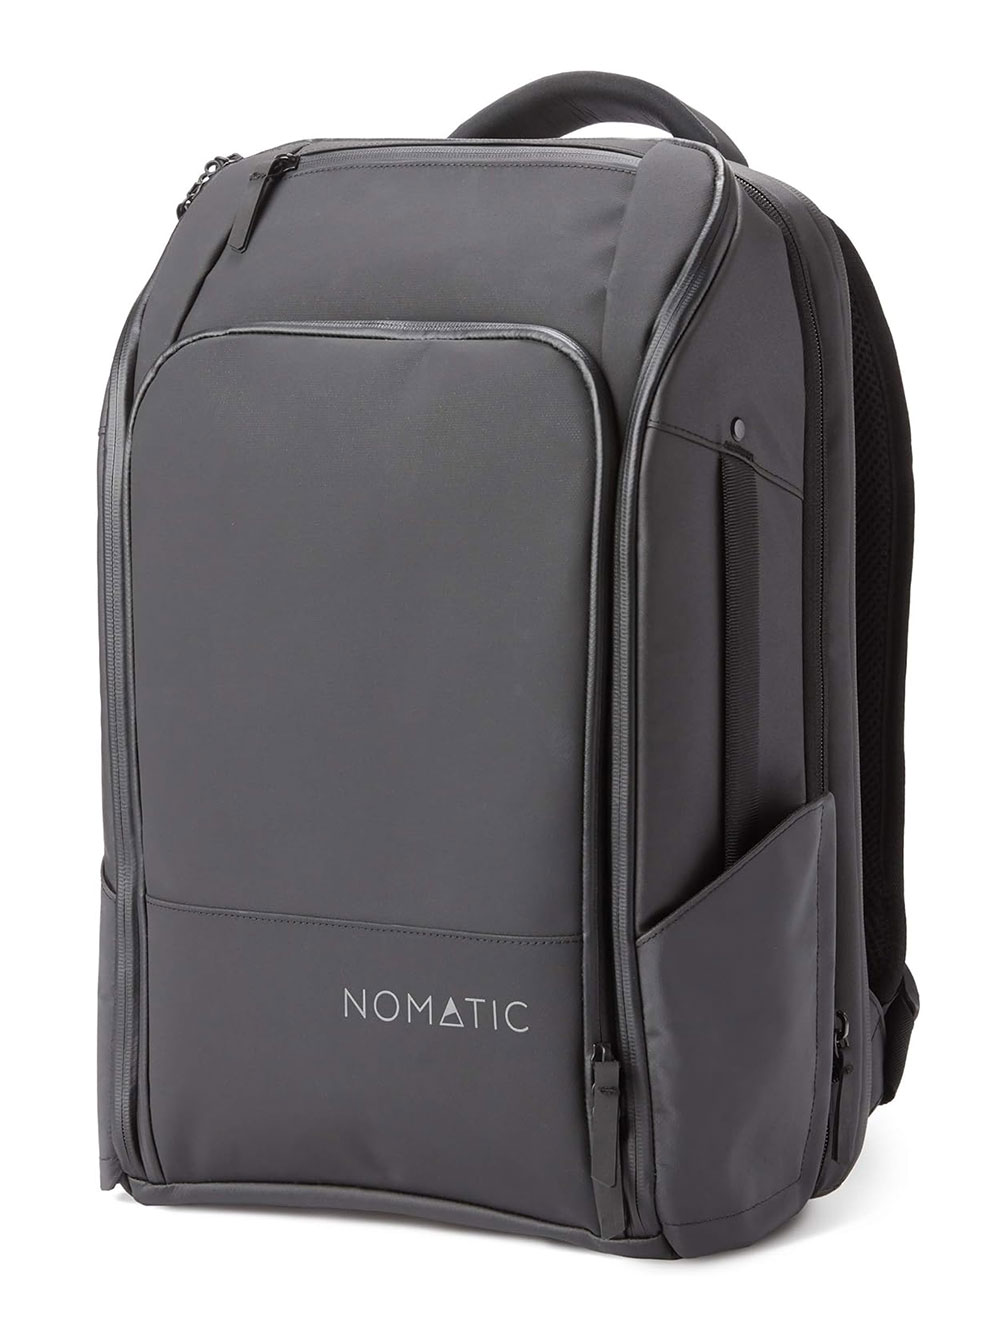 NOMATIC Travel Pack - 20L Water Resistant Laptop Bag